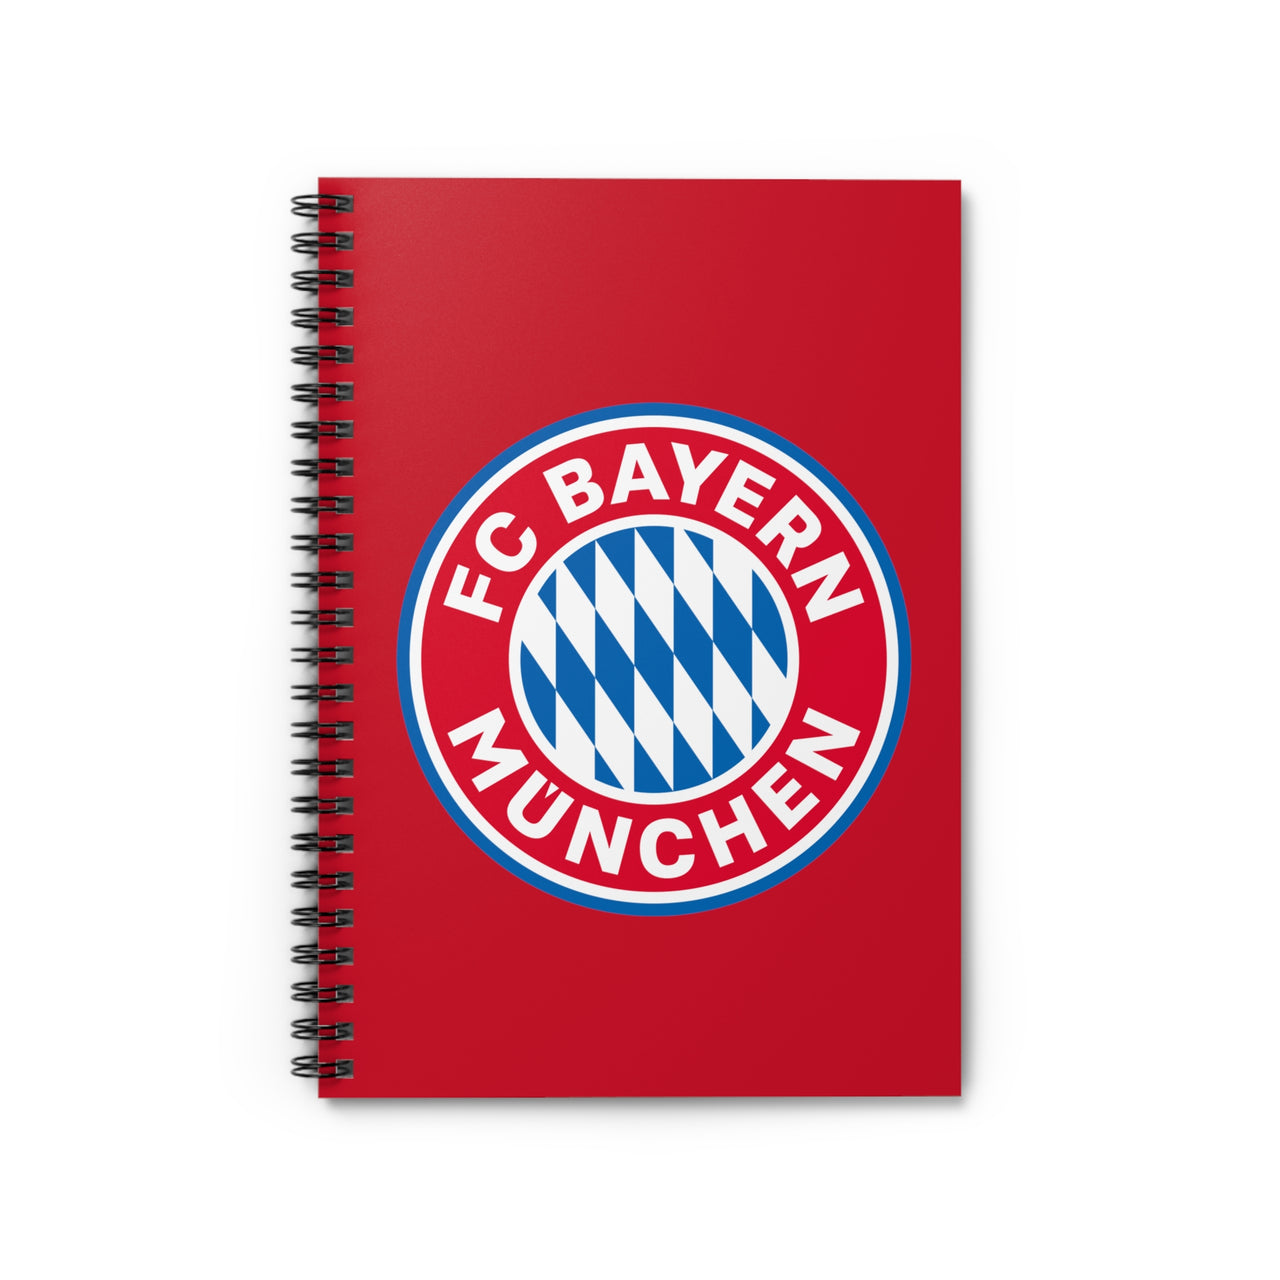 Bayern Munich Spiral Notebook - Ruled Line